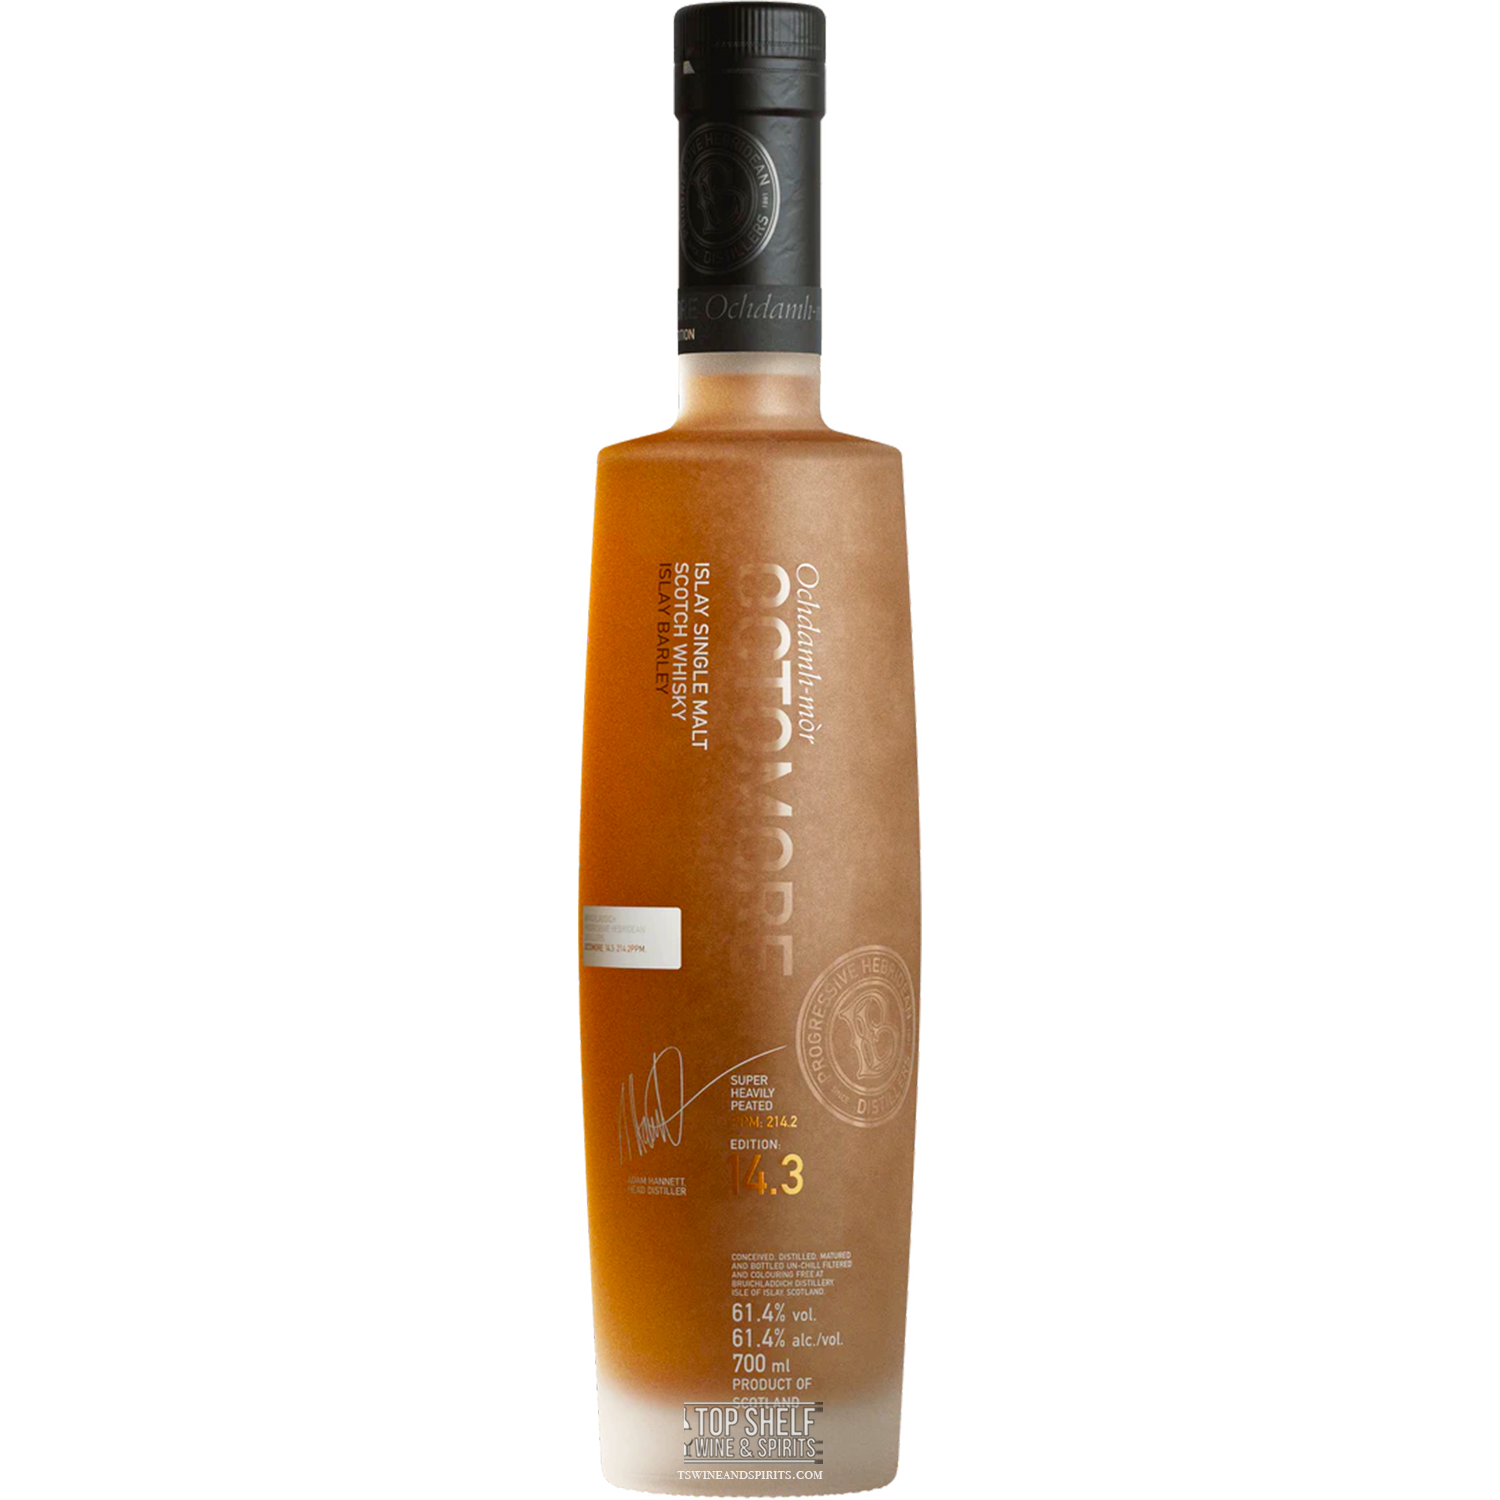 Bruichladdich Octomore 14.3 Single Malt Scotch Whisky | Delivery 